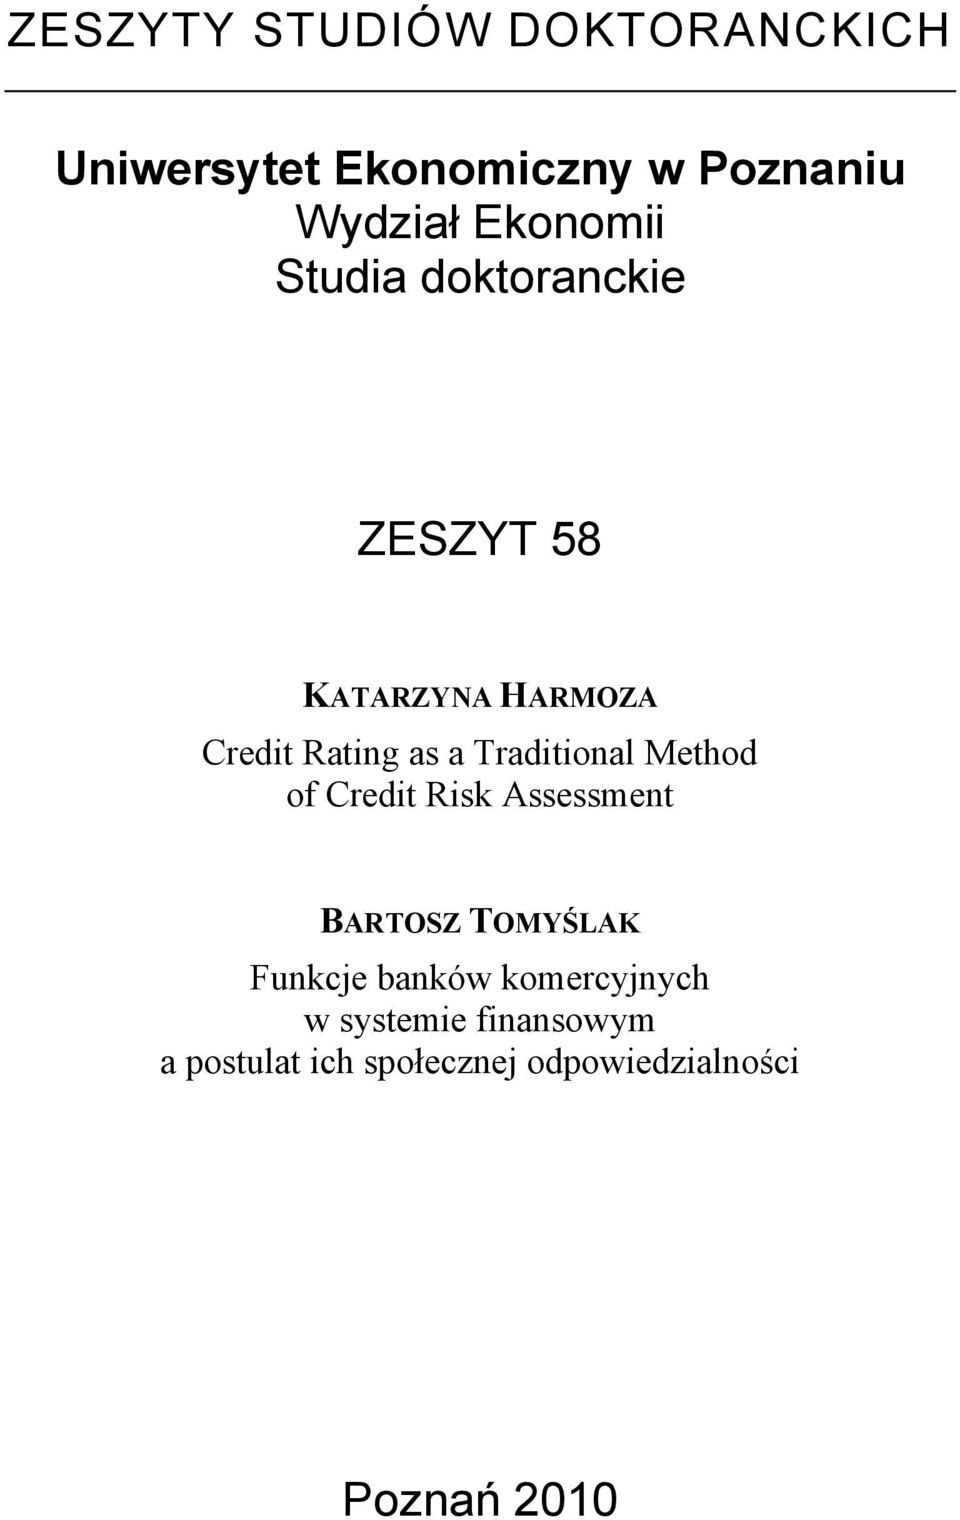 Traditional Method of Credit Risk Assessment BARTOSZ TOMYŚLAK Funkcje banków